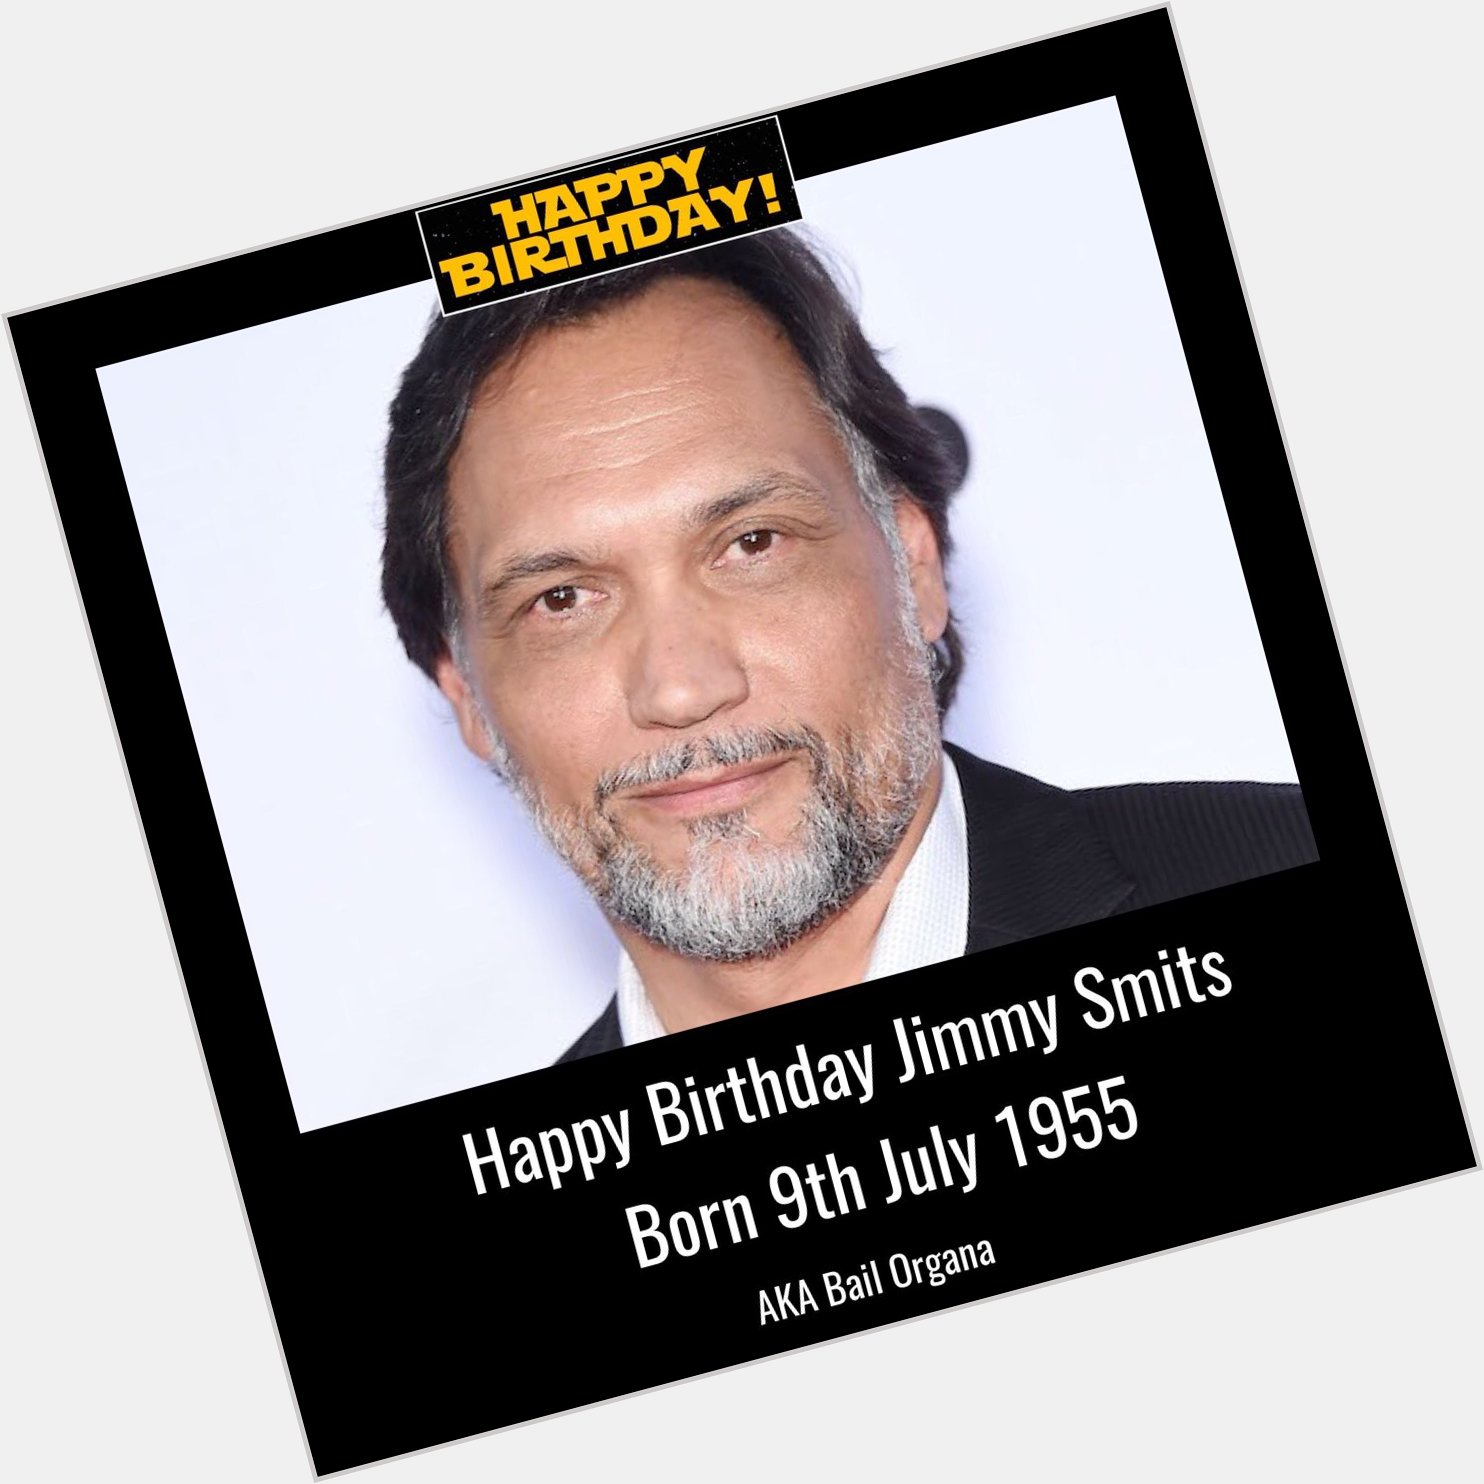 Happy Birthday Jimmy Smits aka Bail Organa. Born 9th July 1955.   